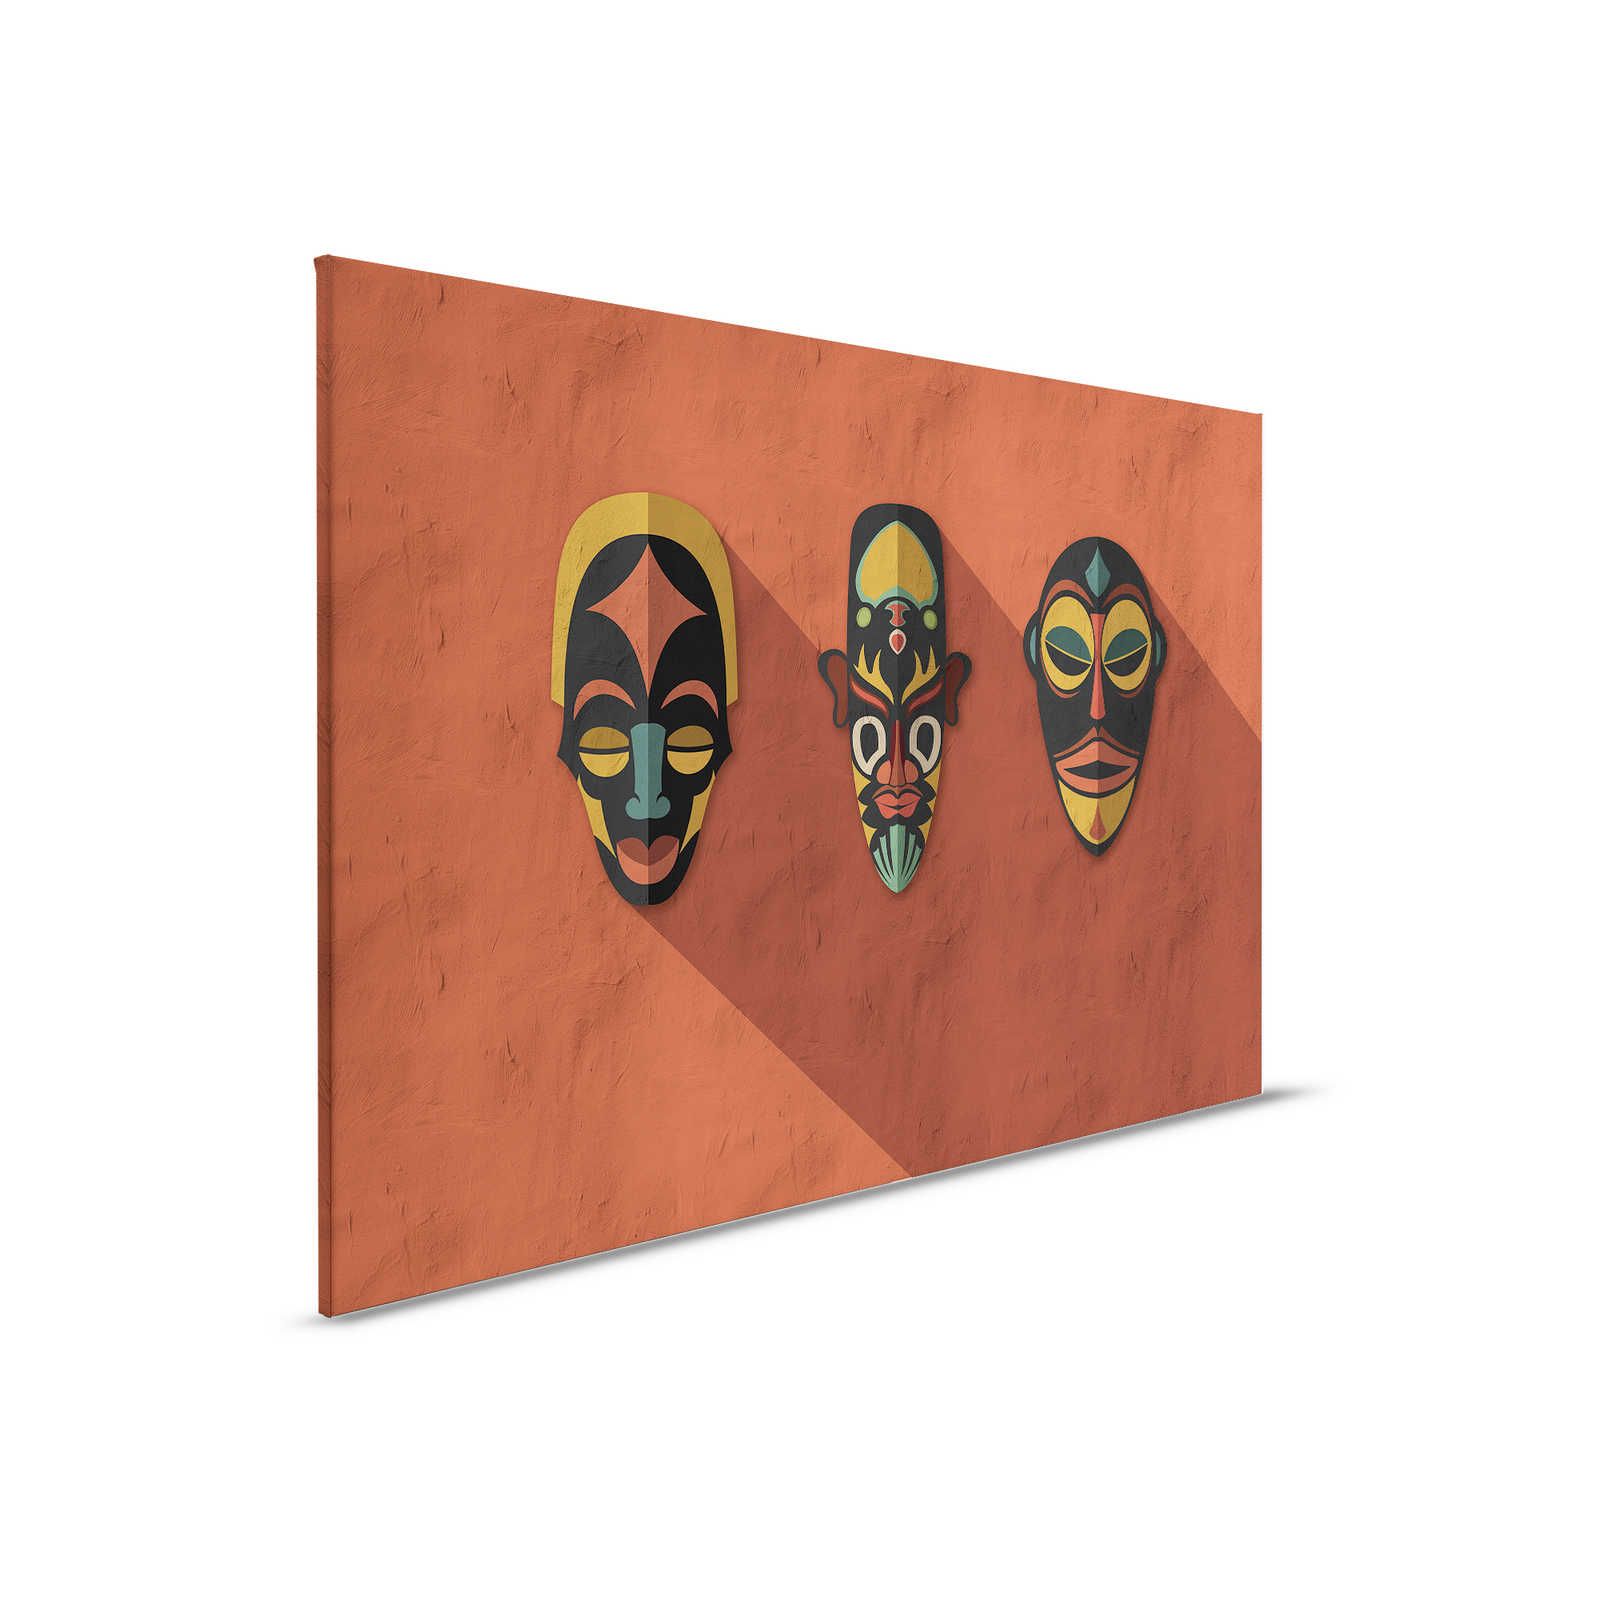         Zulu 2 - Canvas painting Terracotta Orange, Africa Masks Zulu Design - 0.90 m x 0.60 m
    